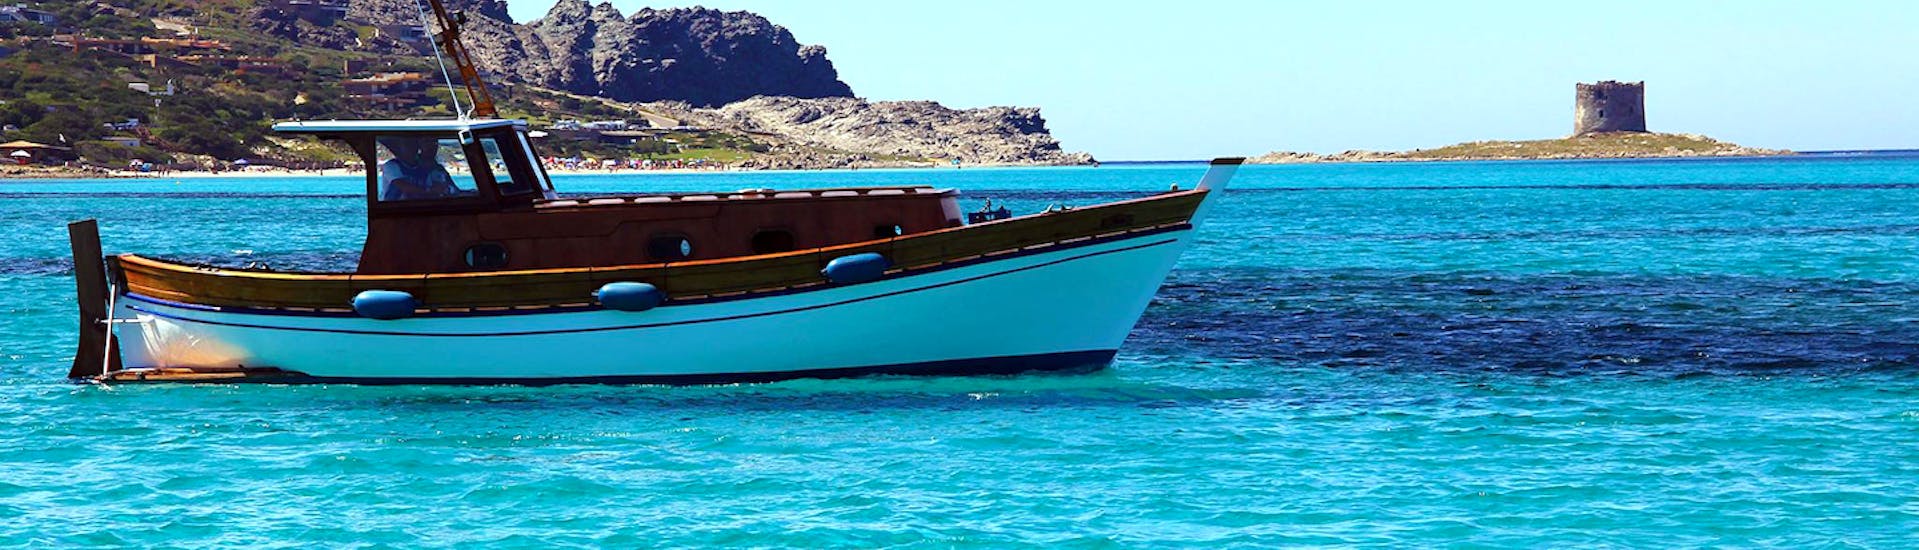 Photo prise lors de la Balade privée en bateau au parc national de l'Asinara avec Déjeuner avec Onda Blu Asinara.